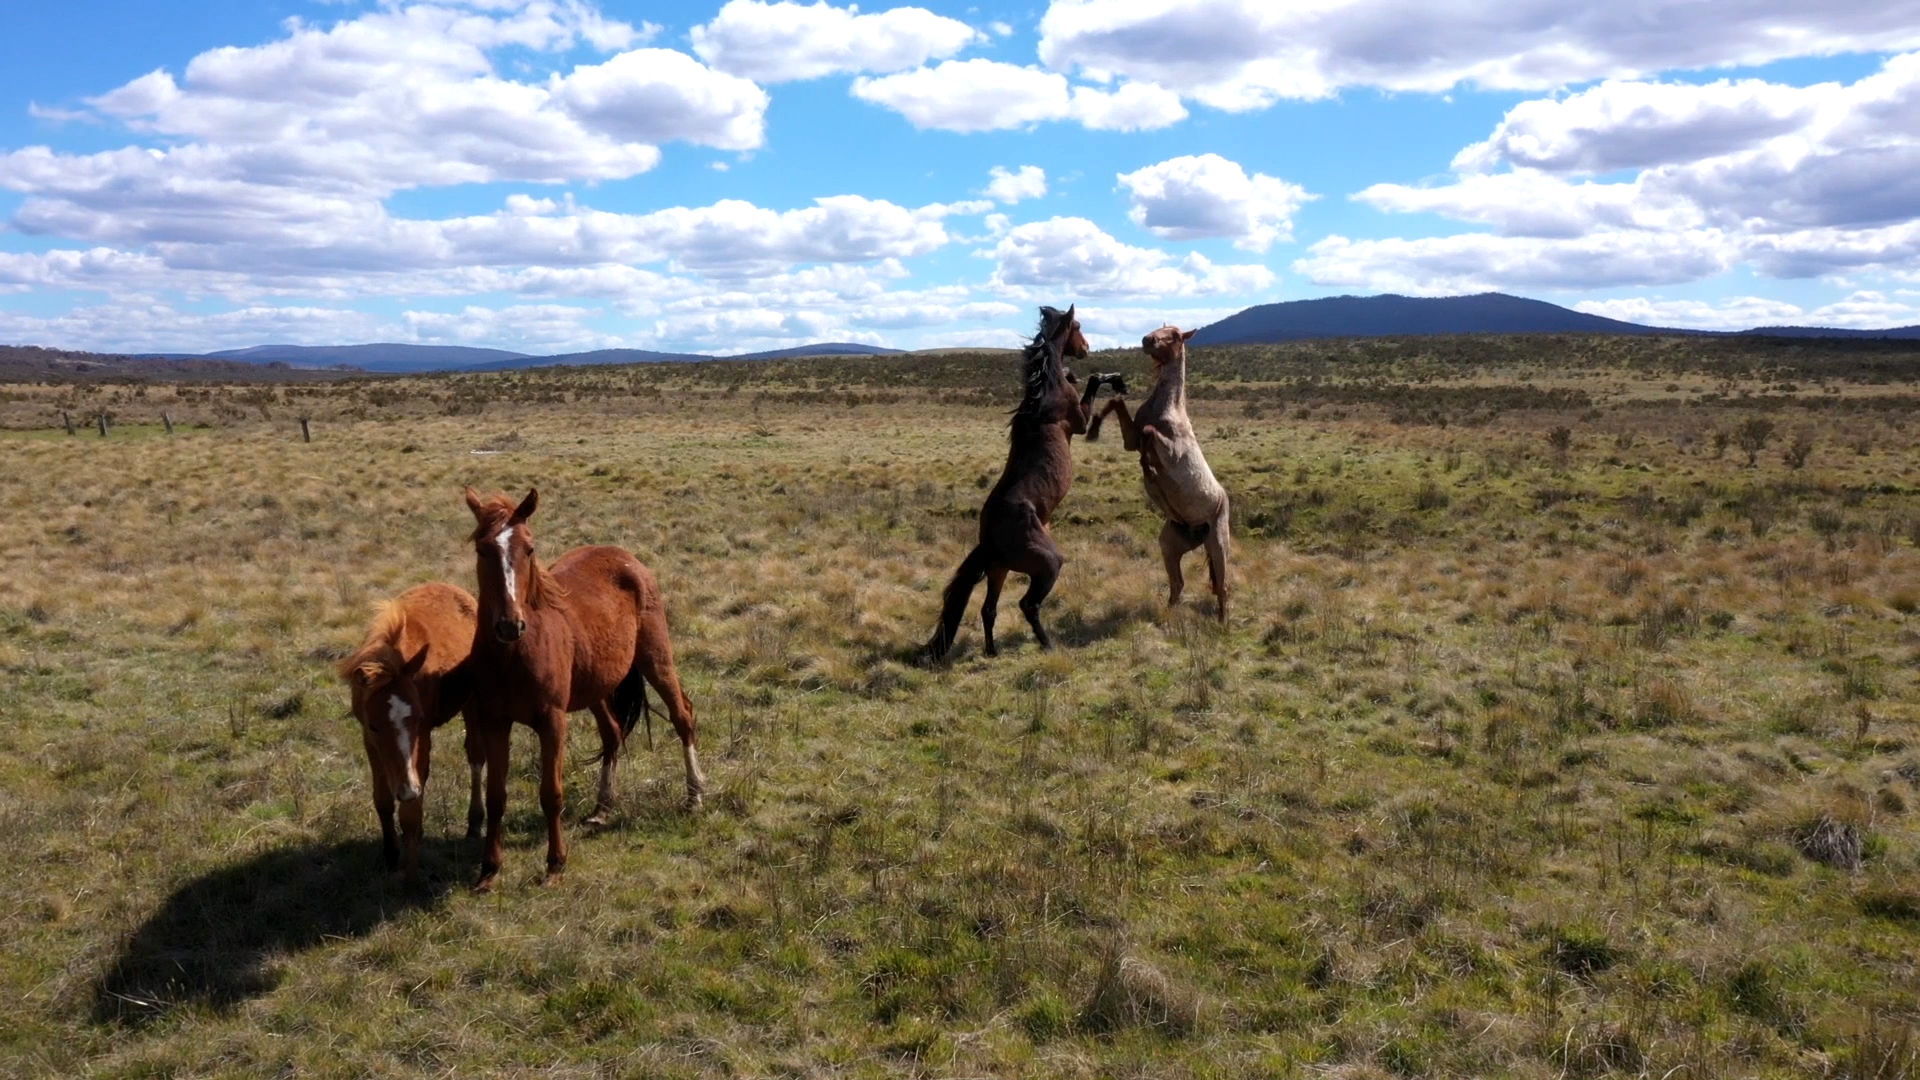 T两匹马在开阔的平原上互相面对，积极地后退。另外两匹马站在前景中。